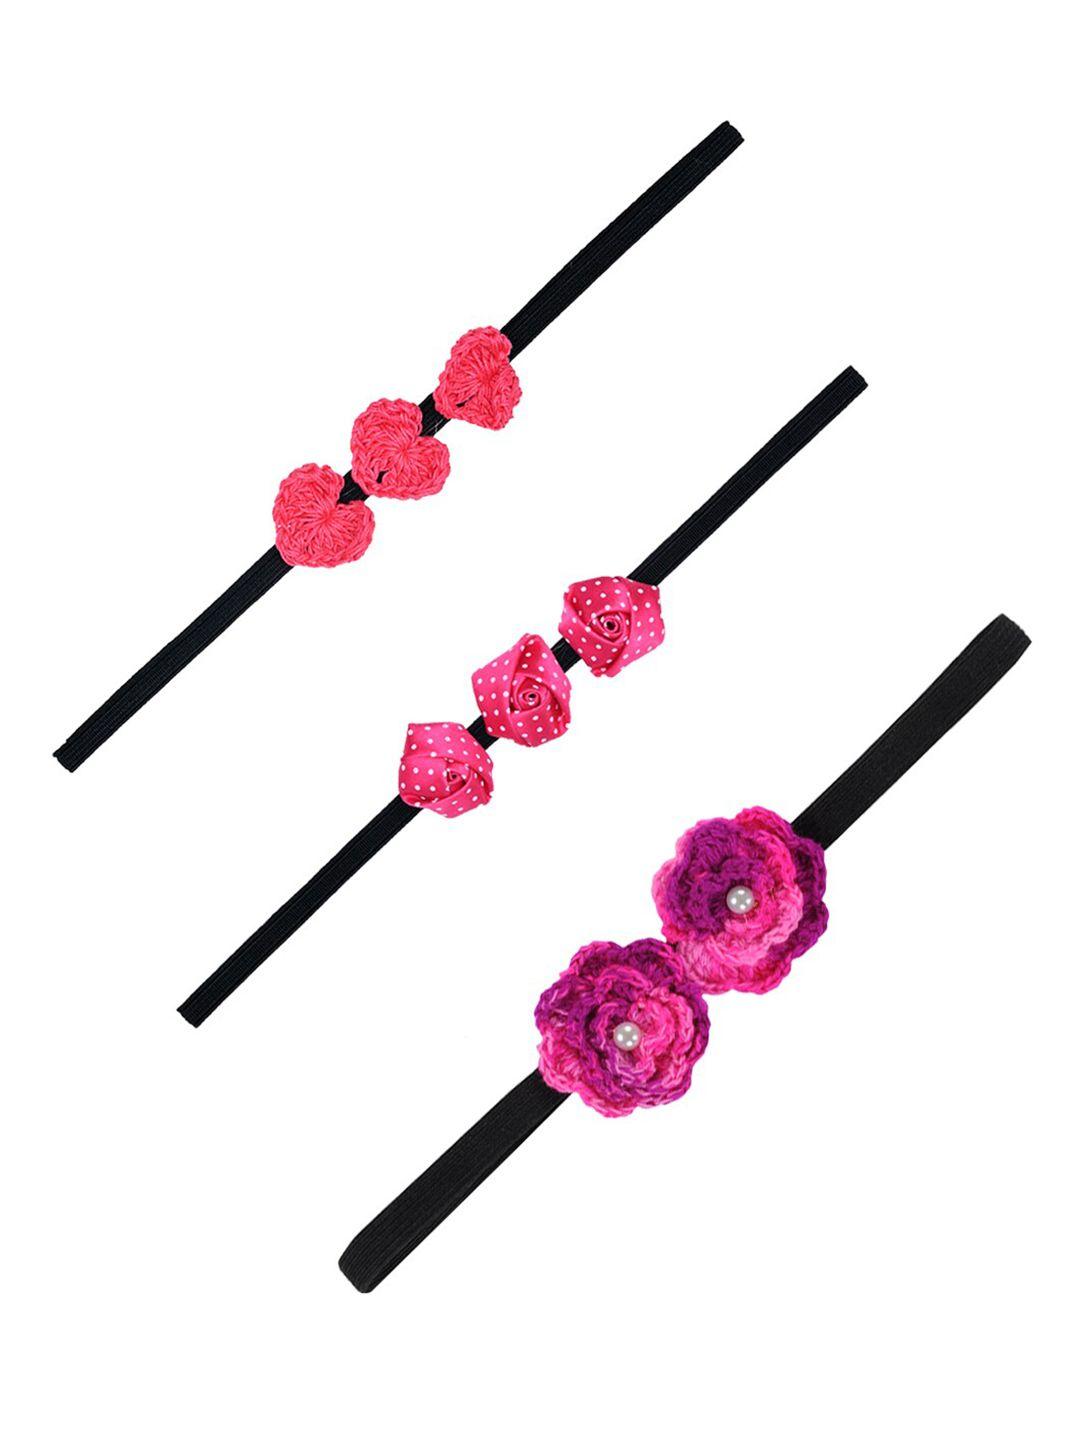 funkrafts girls black & pink set of 3 hair accessory bands